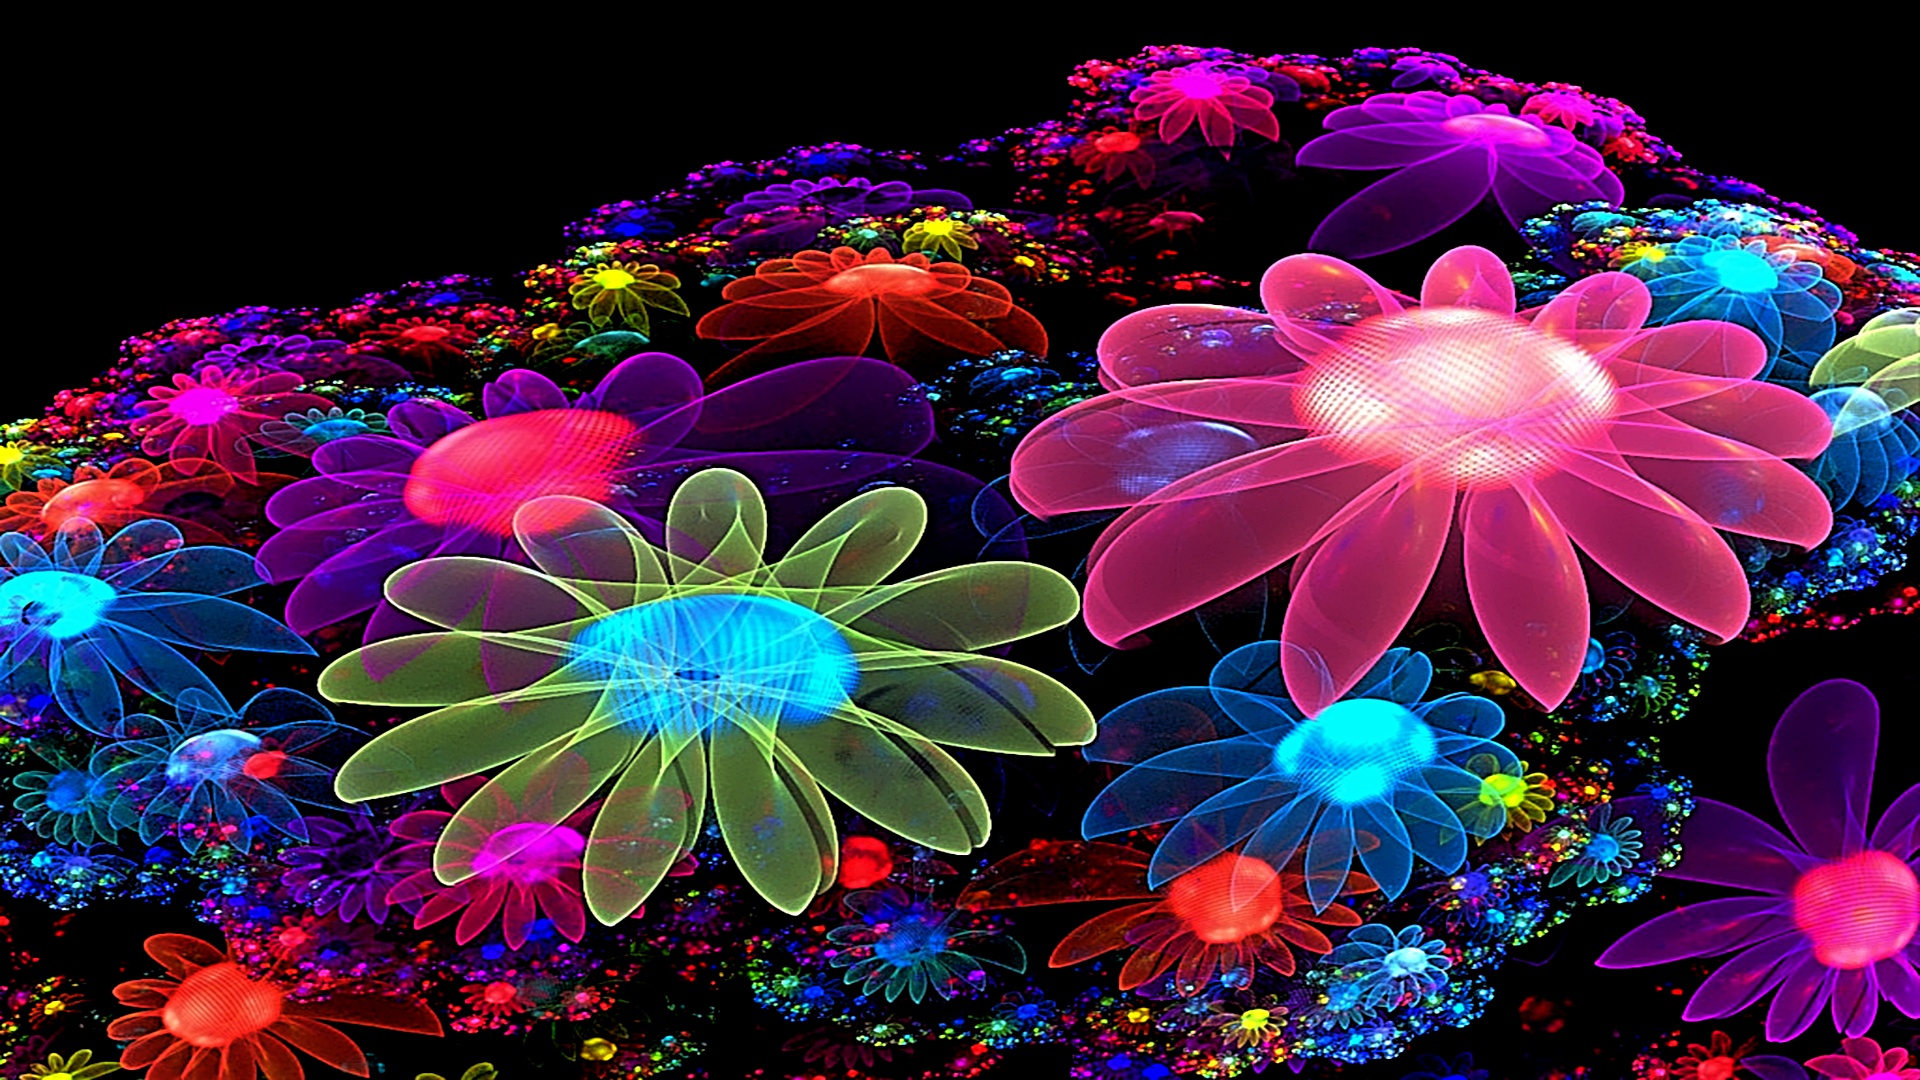 Colorful Hq Wallpaper Image For Desktop HD